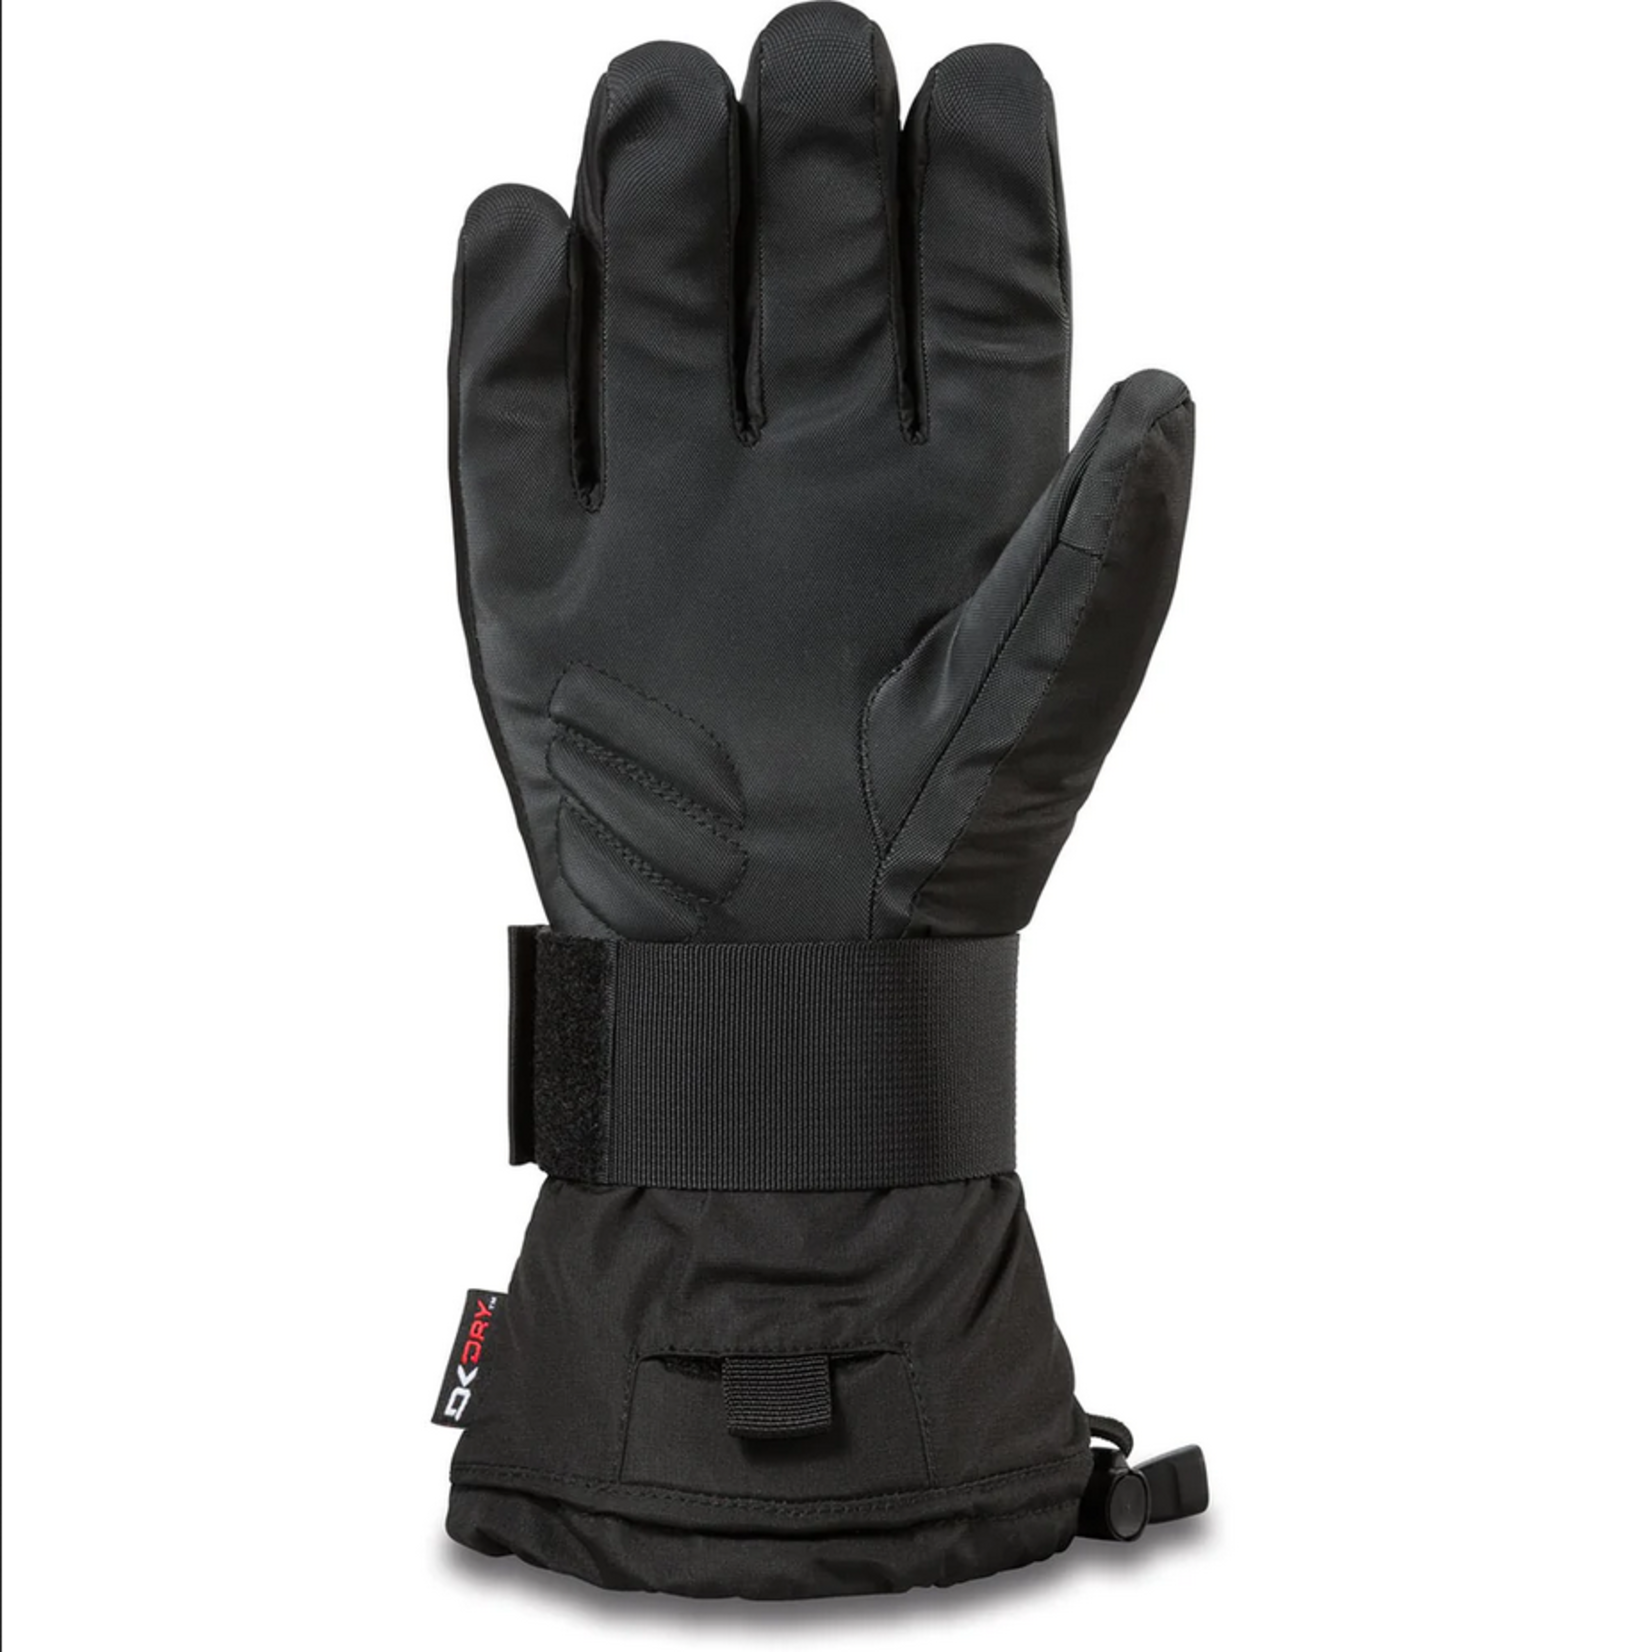 DAKINE Dakine Wrist Guard Gloves 2024